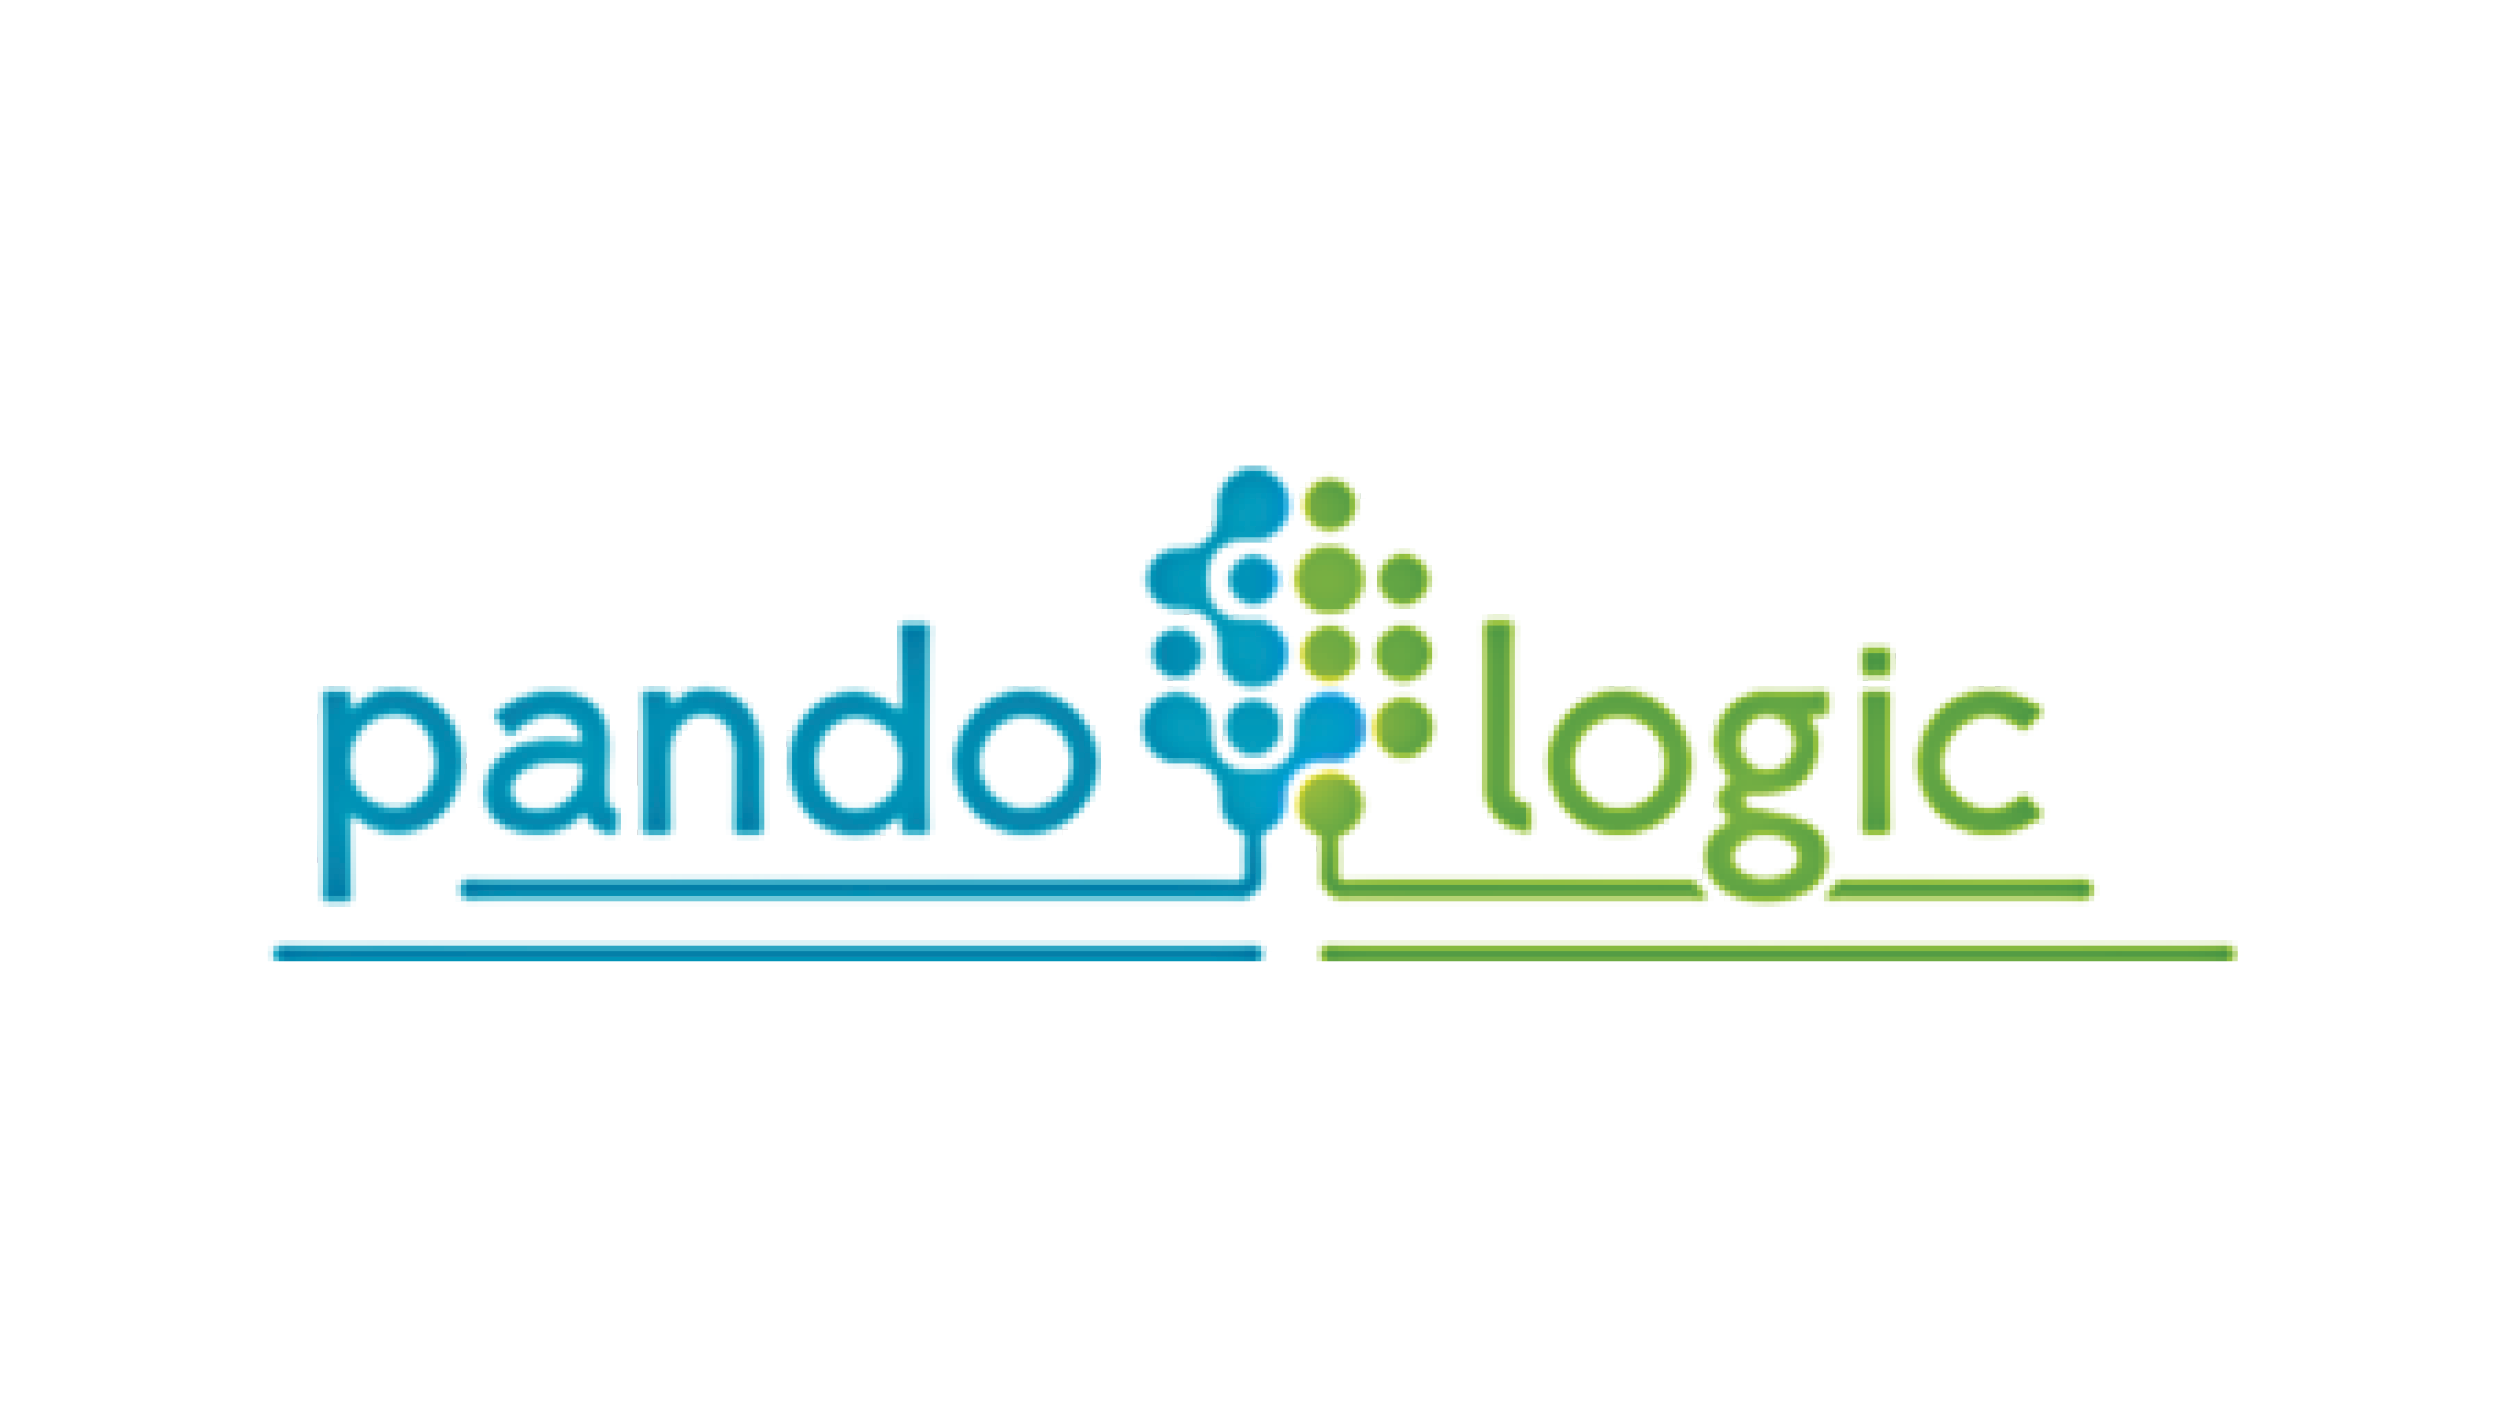 Edison Partners Announces Sale of PandoLogic for $150 Million to Veritone